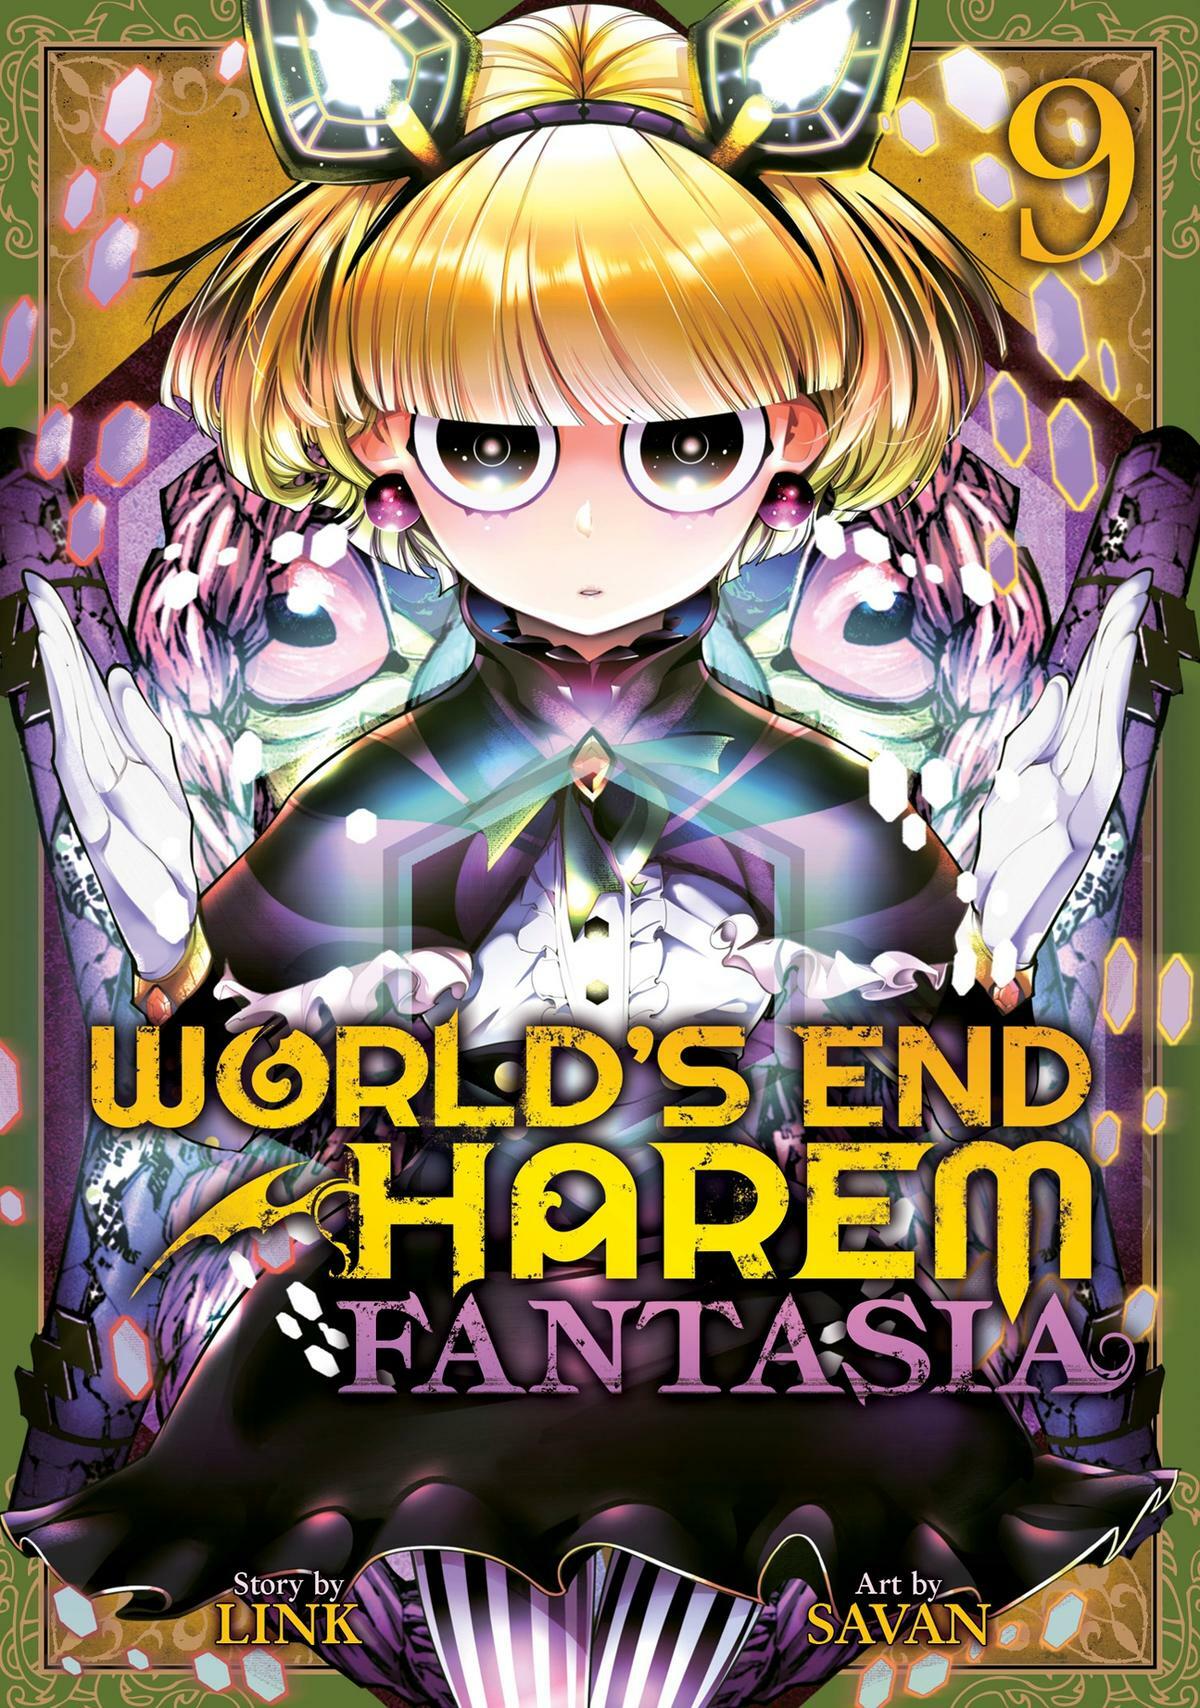 Read World's End Harem - Fantasia Chapter 27: Parting, And on Mangakakalot